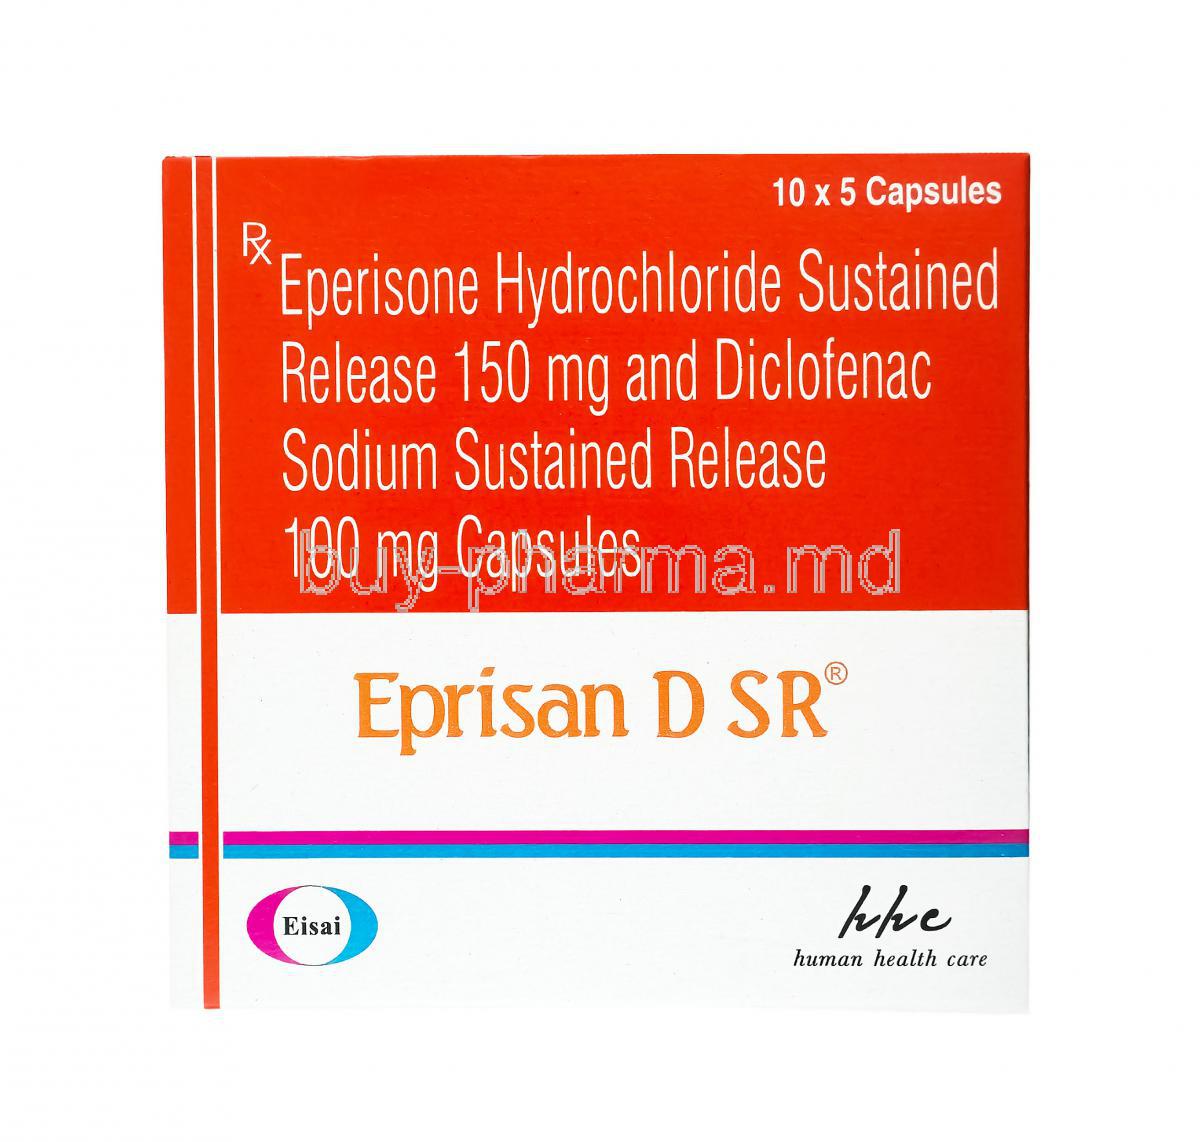 Eprisan D, Eperisone and Diclofenac